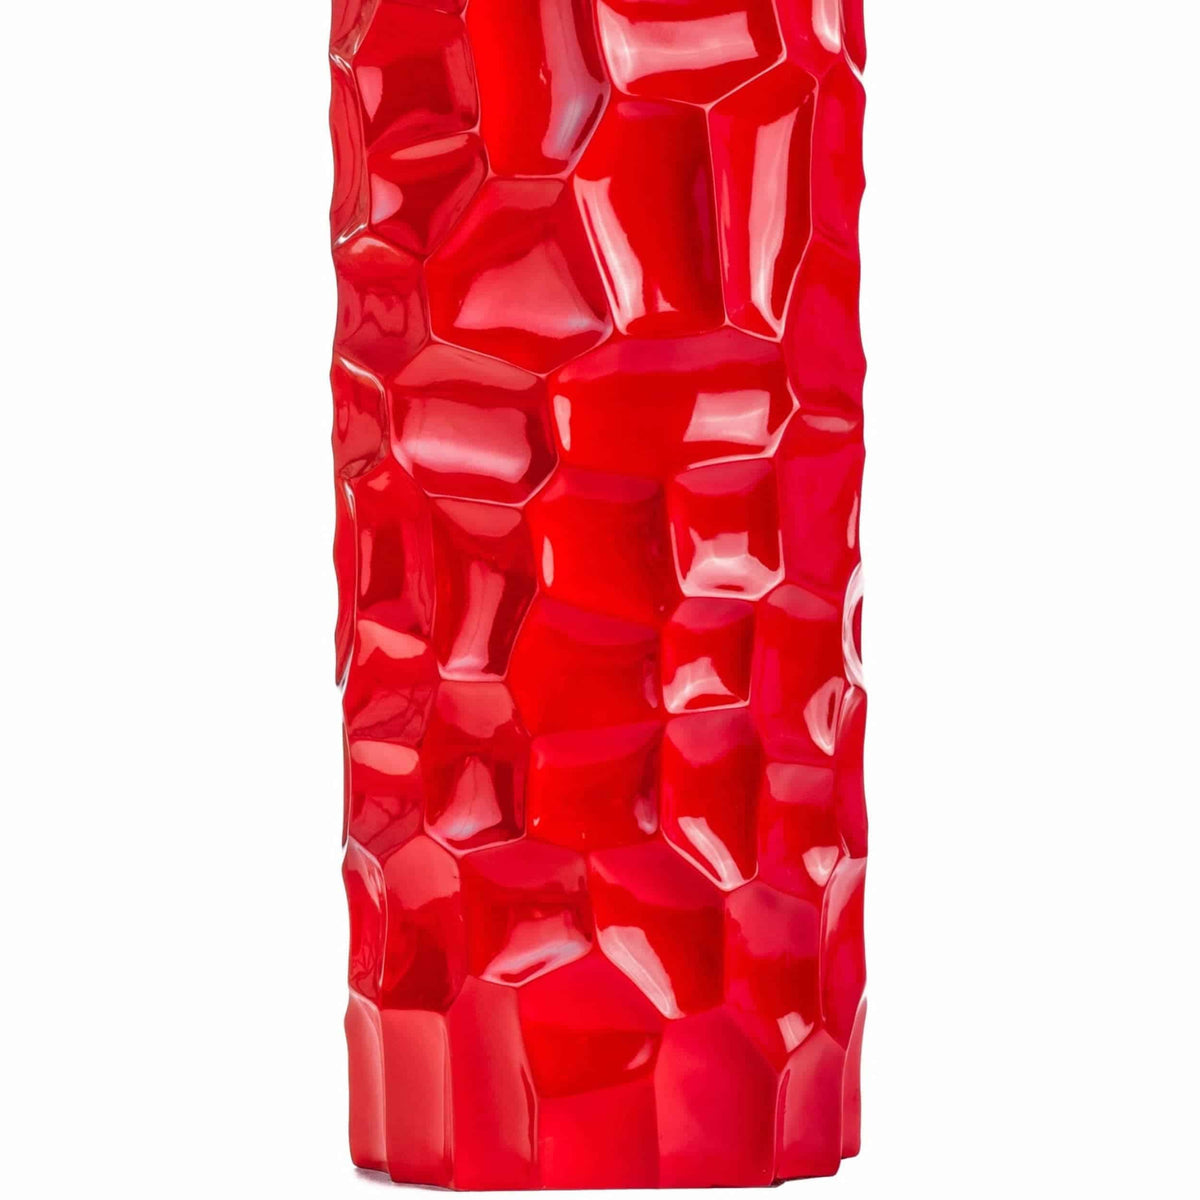 Textured Honeycomb Tall Floor Vase in Red